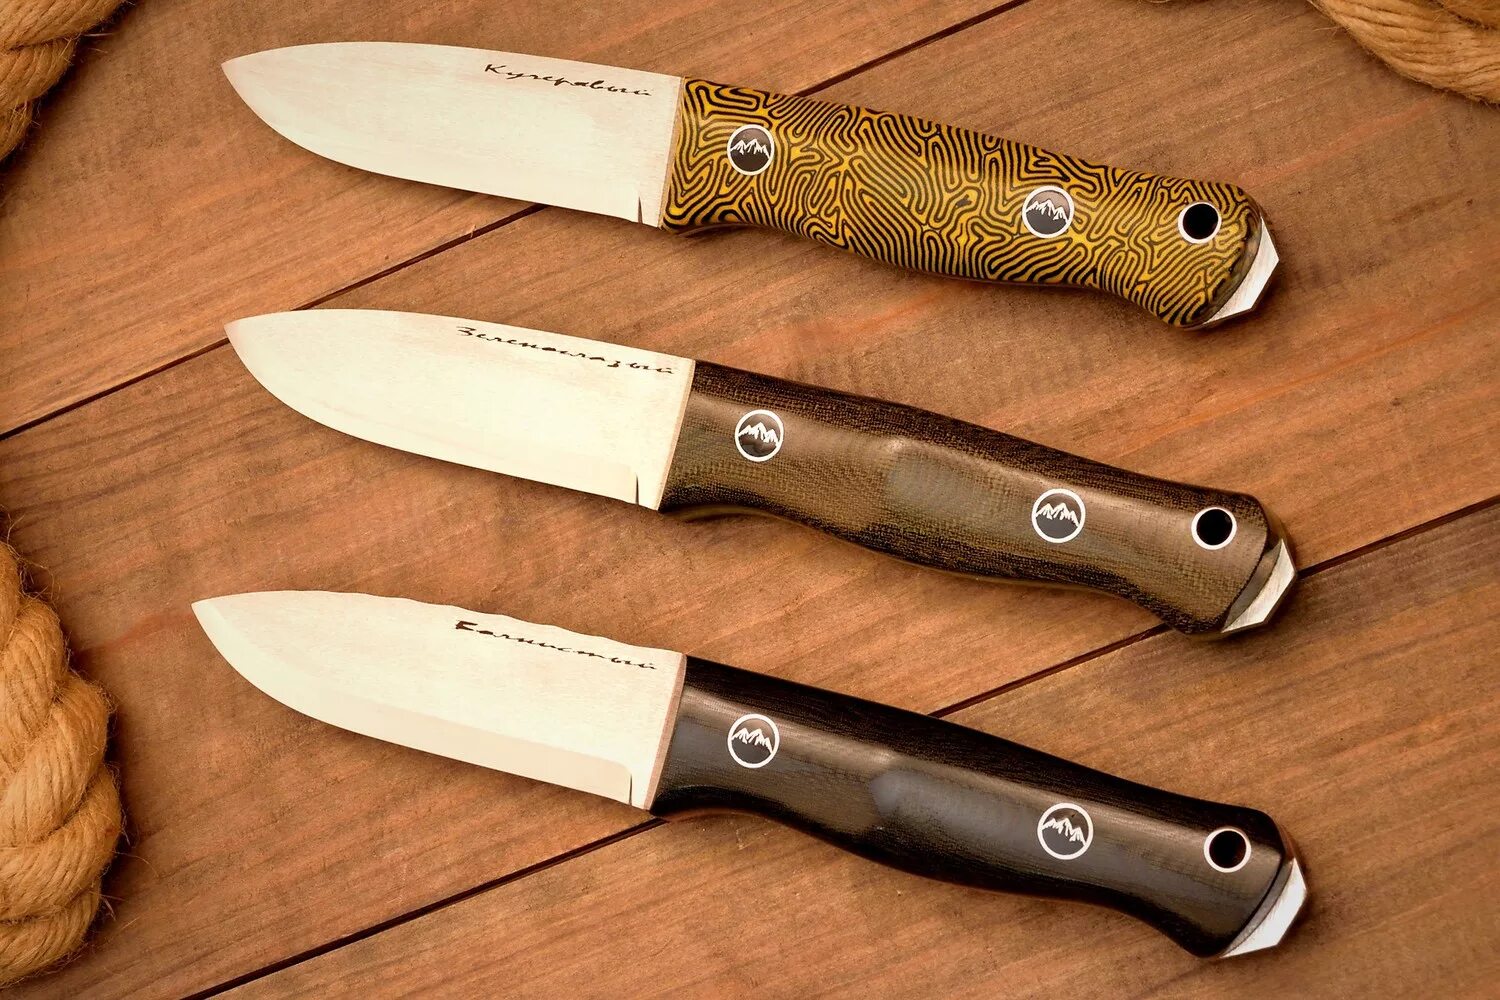 BEAVERKNIFE - Bushcraft America нож. Ножи Бивер НАЙФ. Нож Канада Бивер кнайф. Beaver Knife бушкрафт Америка. Купить нож бивер